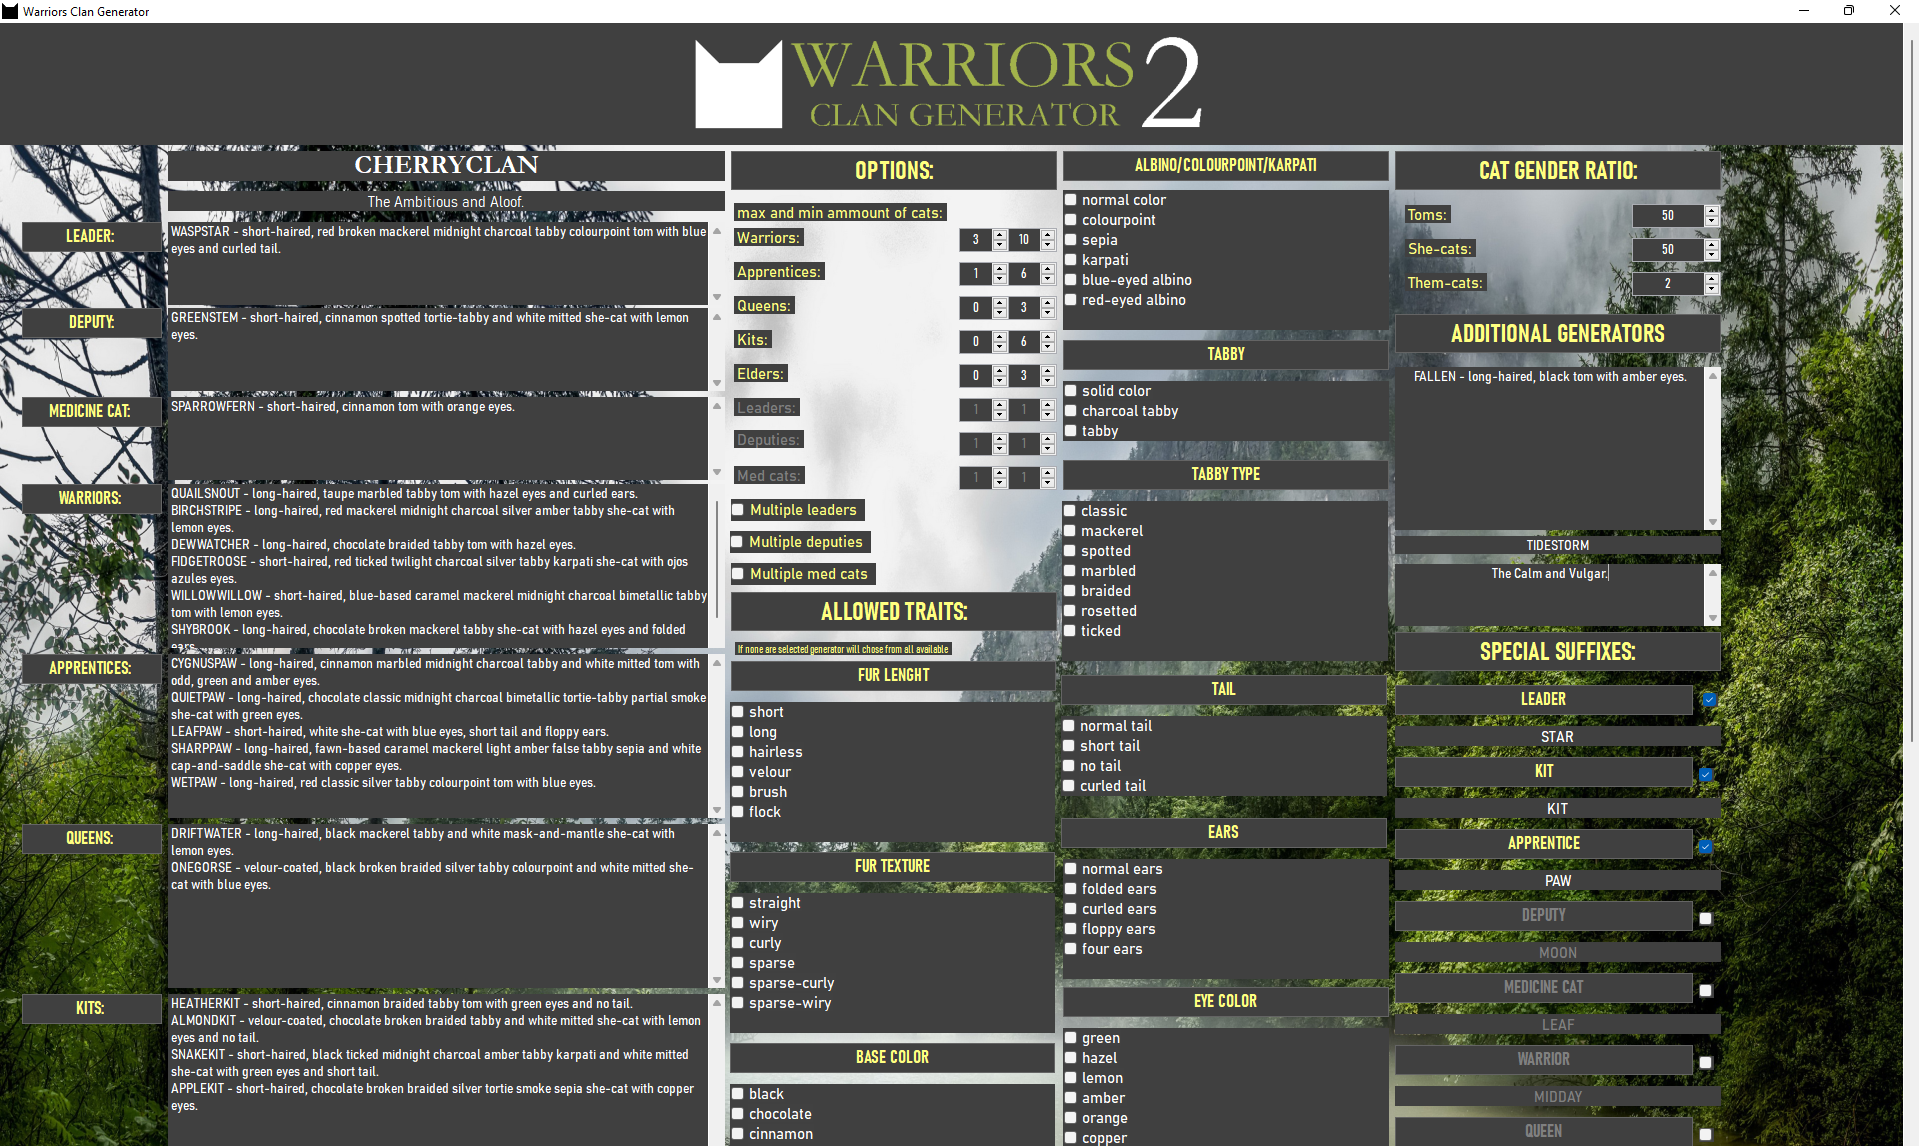 Warriors Tribe Name Generator ― Perchance